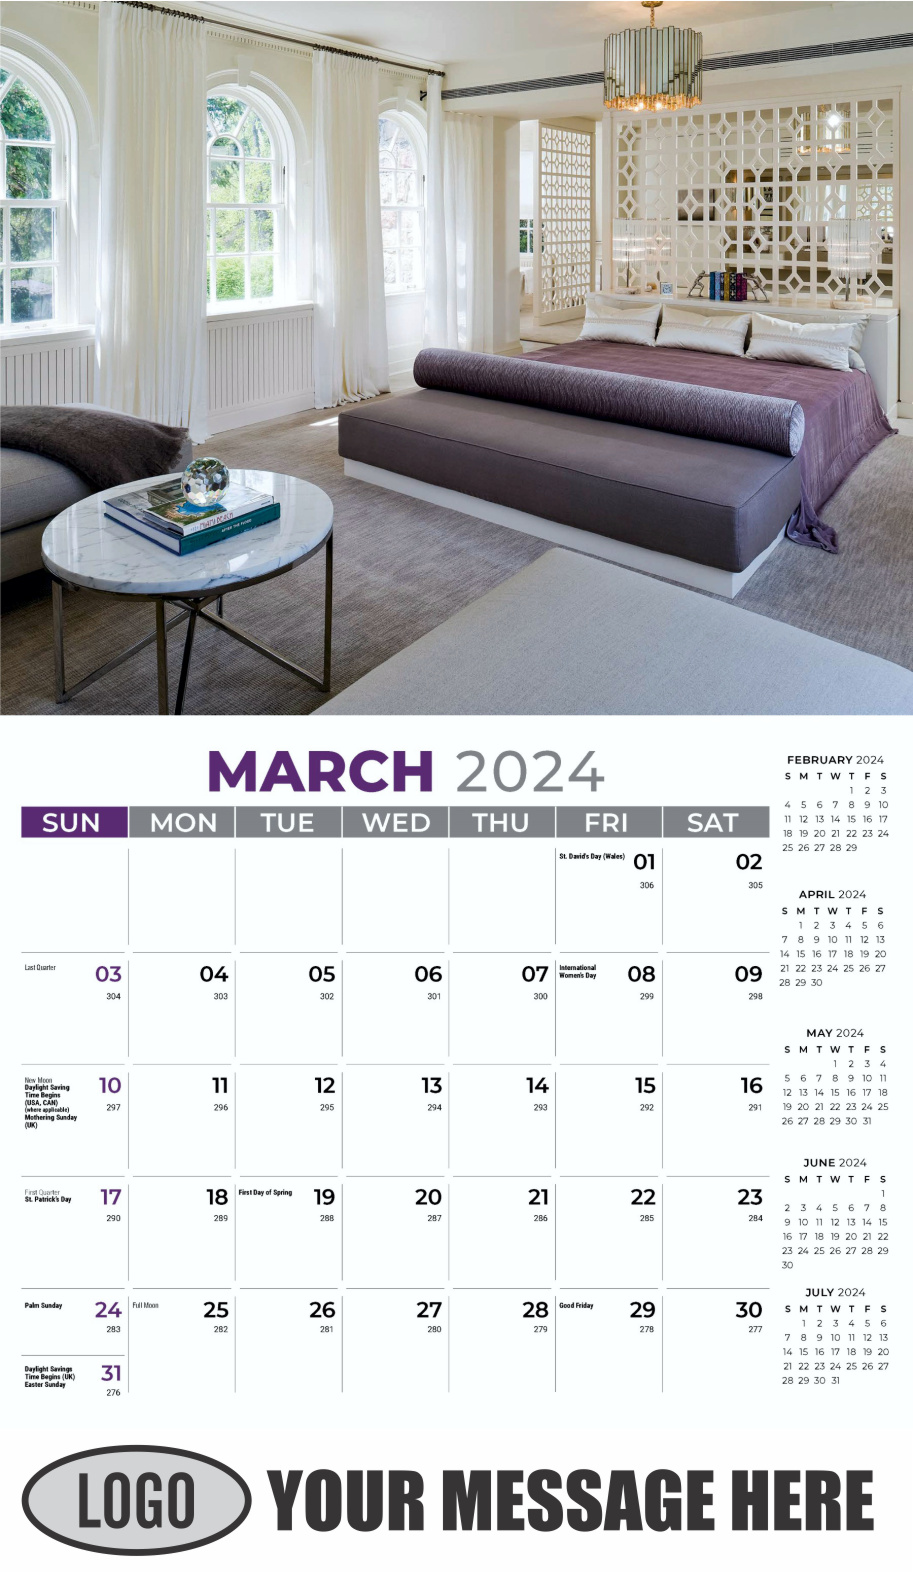 Decor and Design 2024 Interior Design Business Promotional Calendar - March